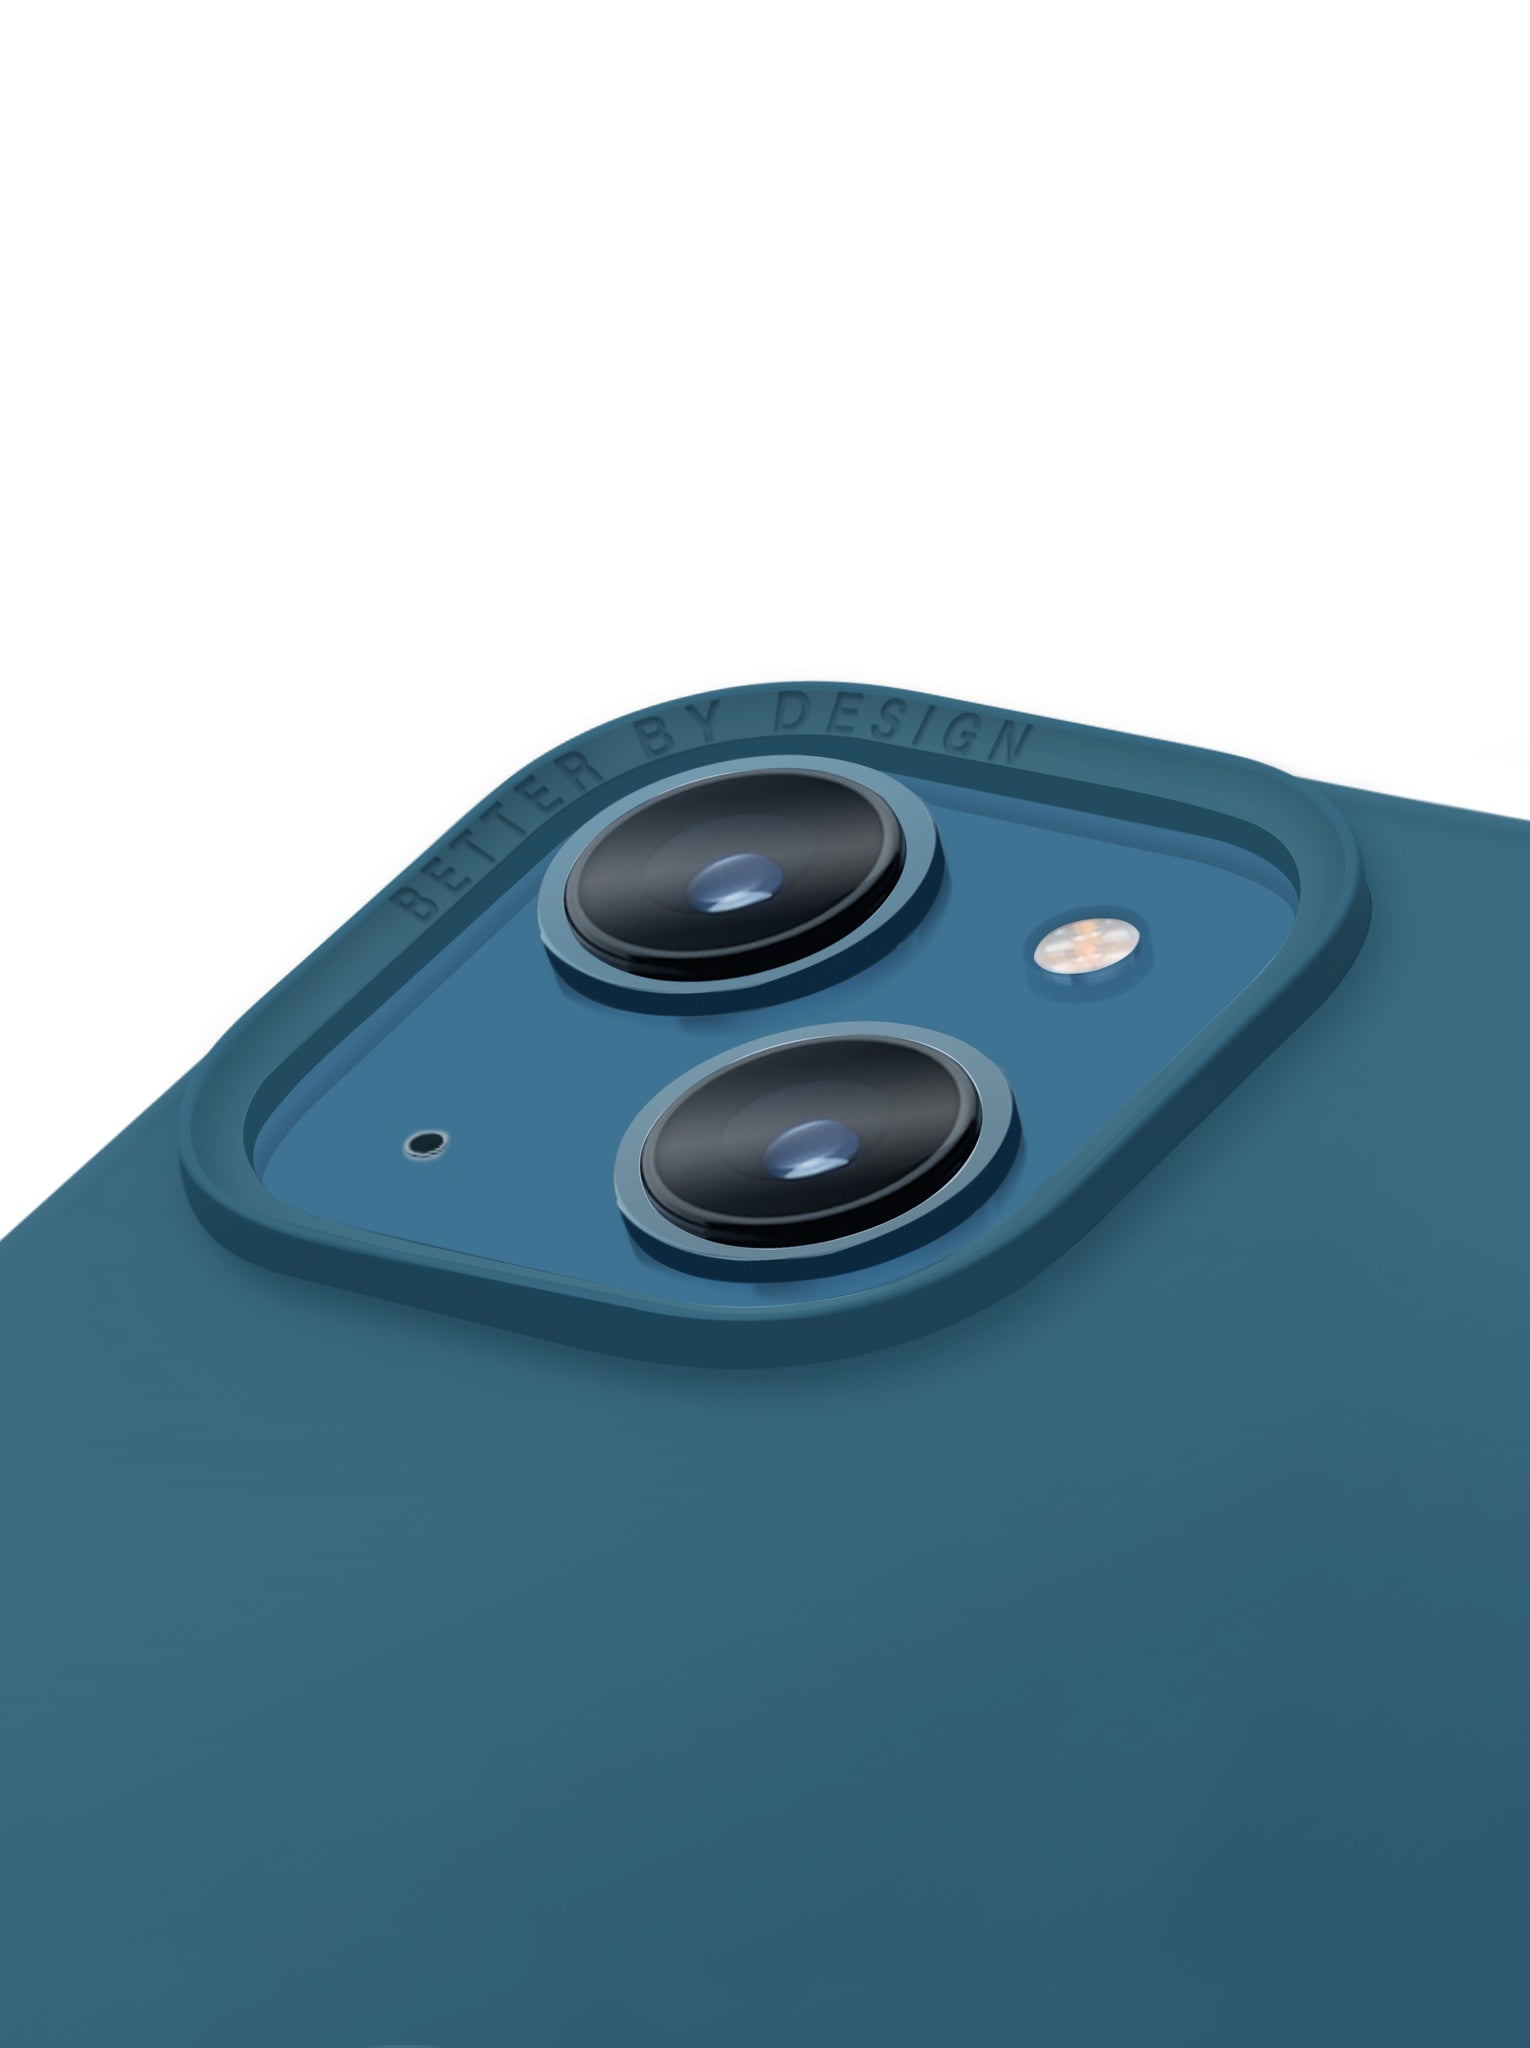 Uniq Iphone 13 Hybrid Lino Hue Mobile Cover / Case  with Magsafe Compatibility - CASPIAN (BLUE) - كفر سليكون مع مق سيف من شركة يونيك